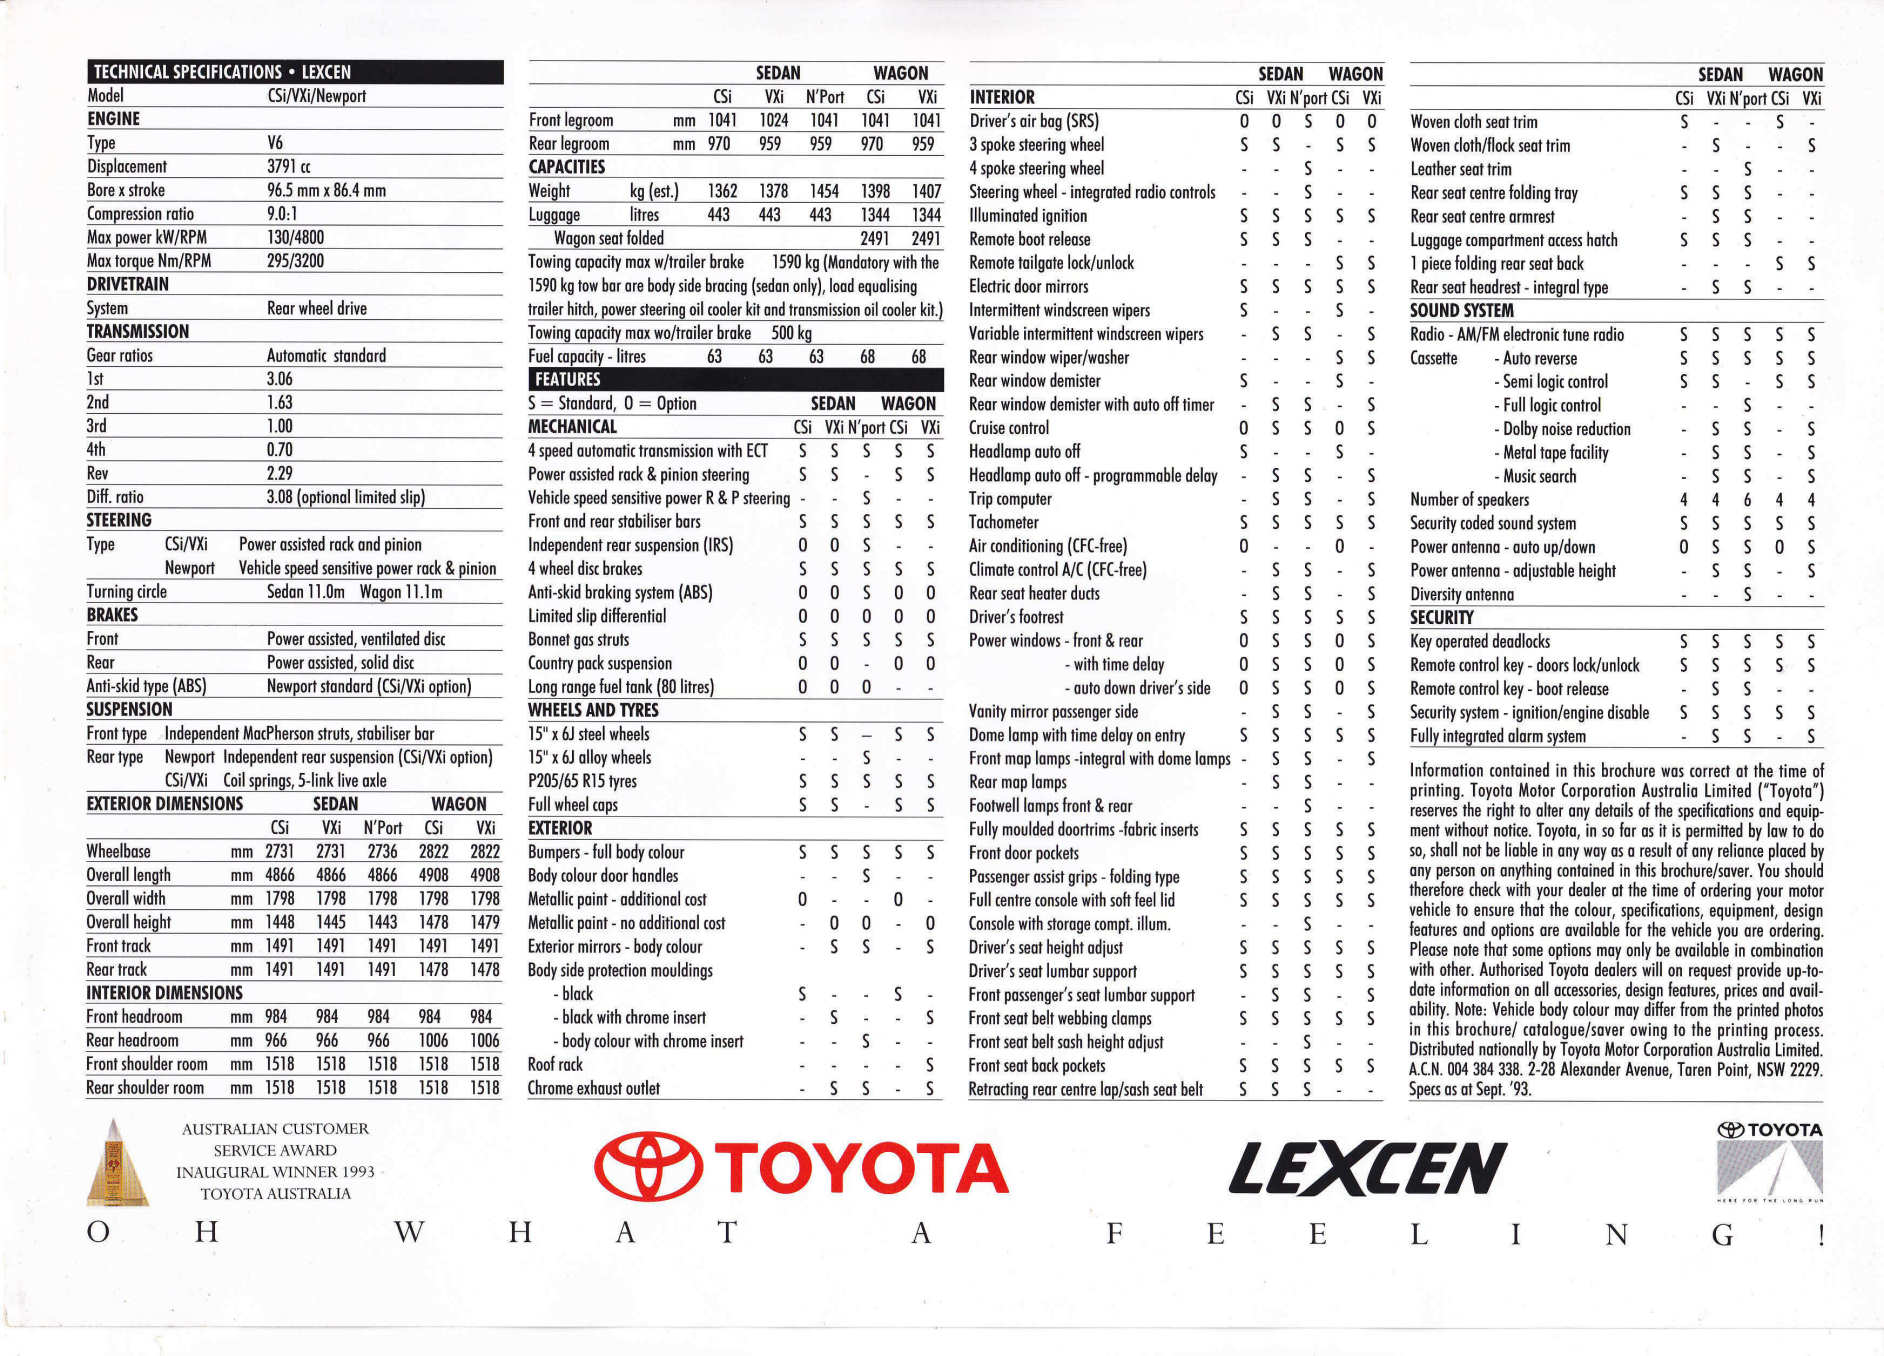 1994_Toyota_Lexcen-I02